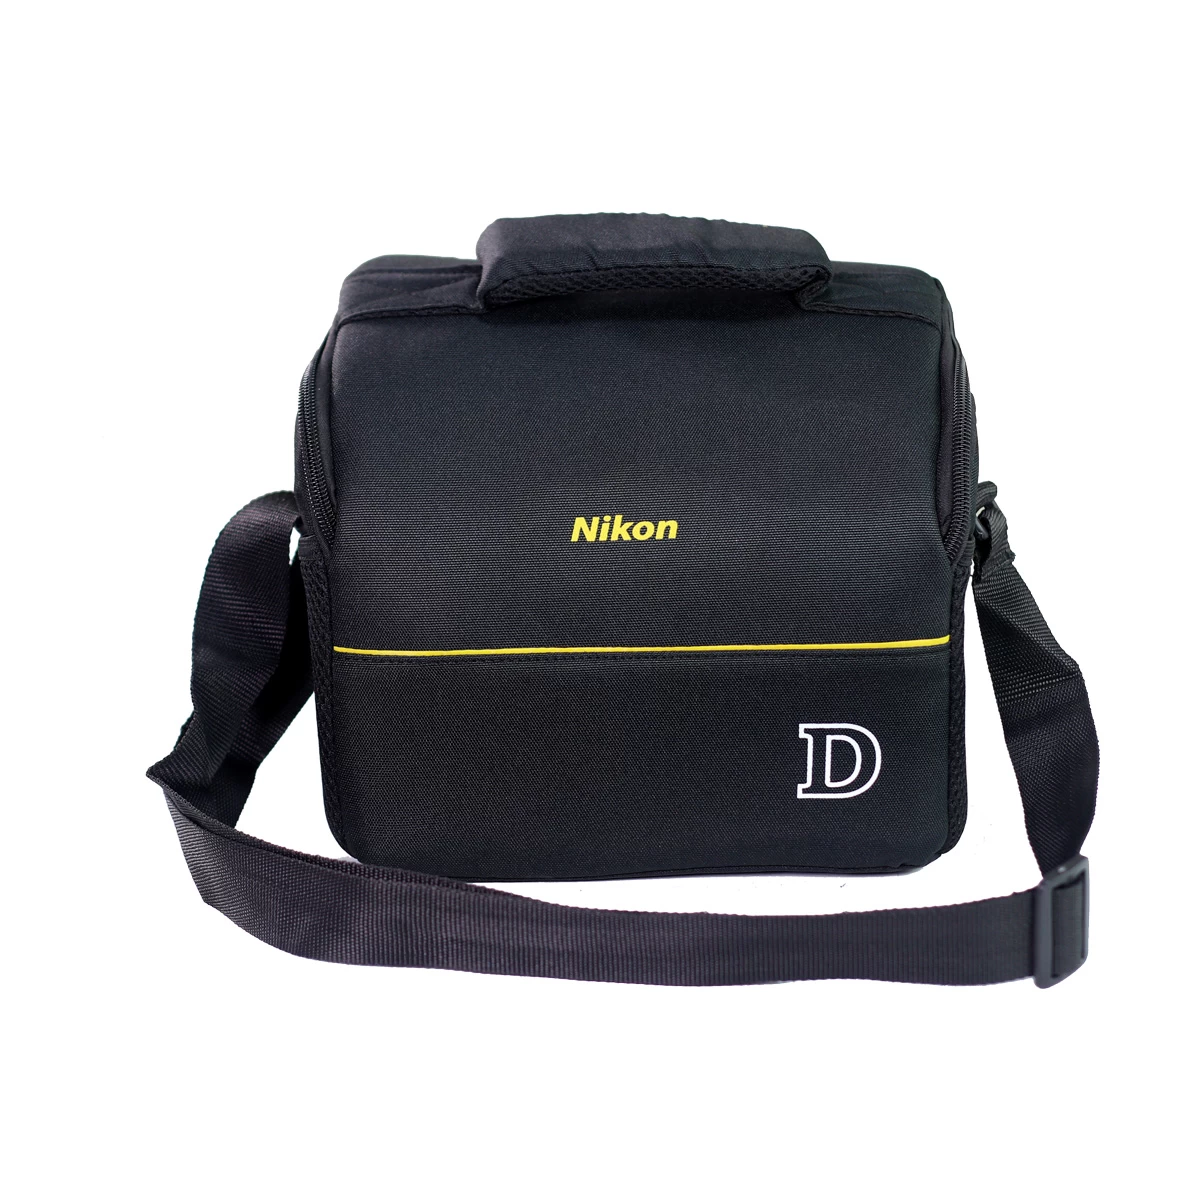 Nikon SLR Camera Bag Small